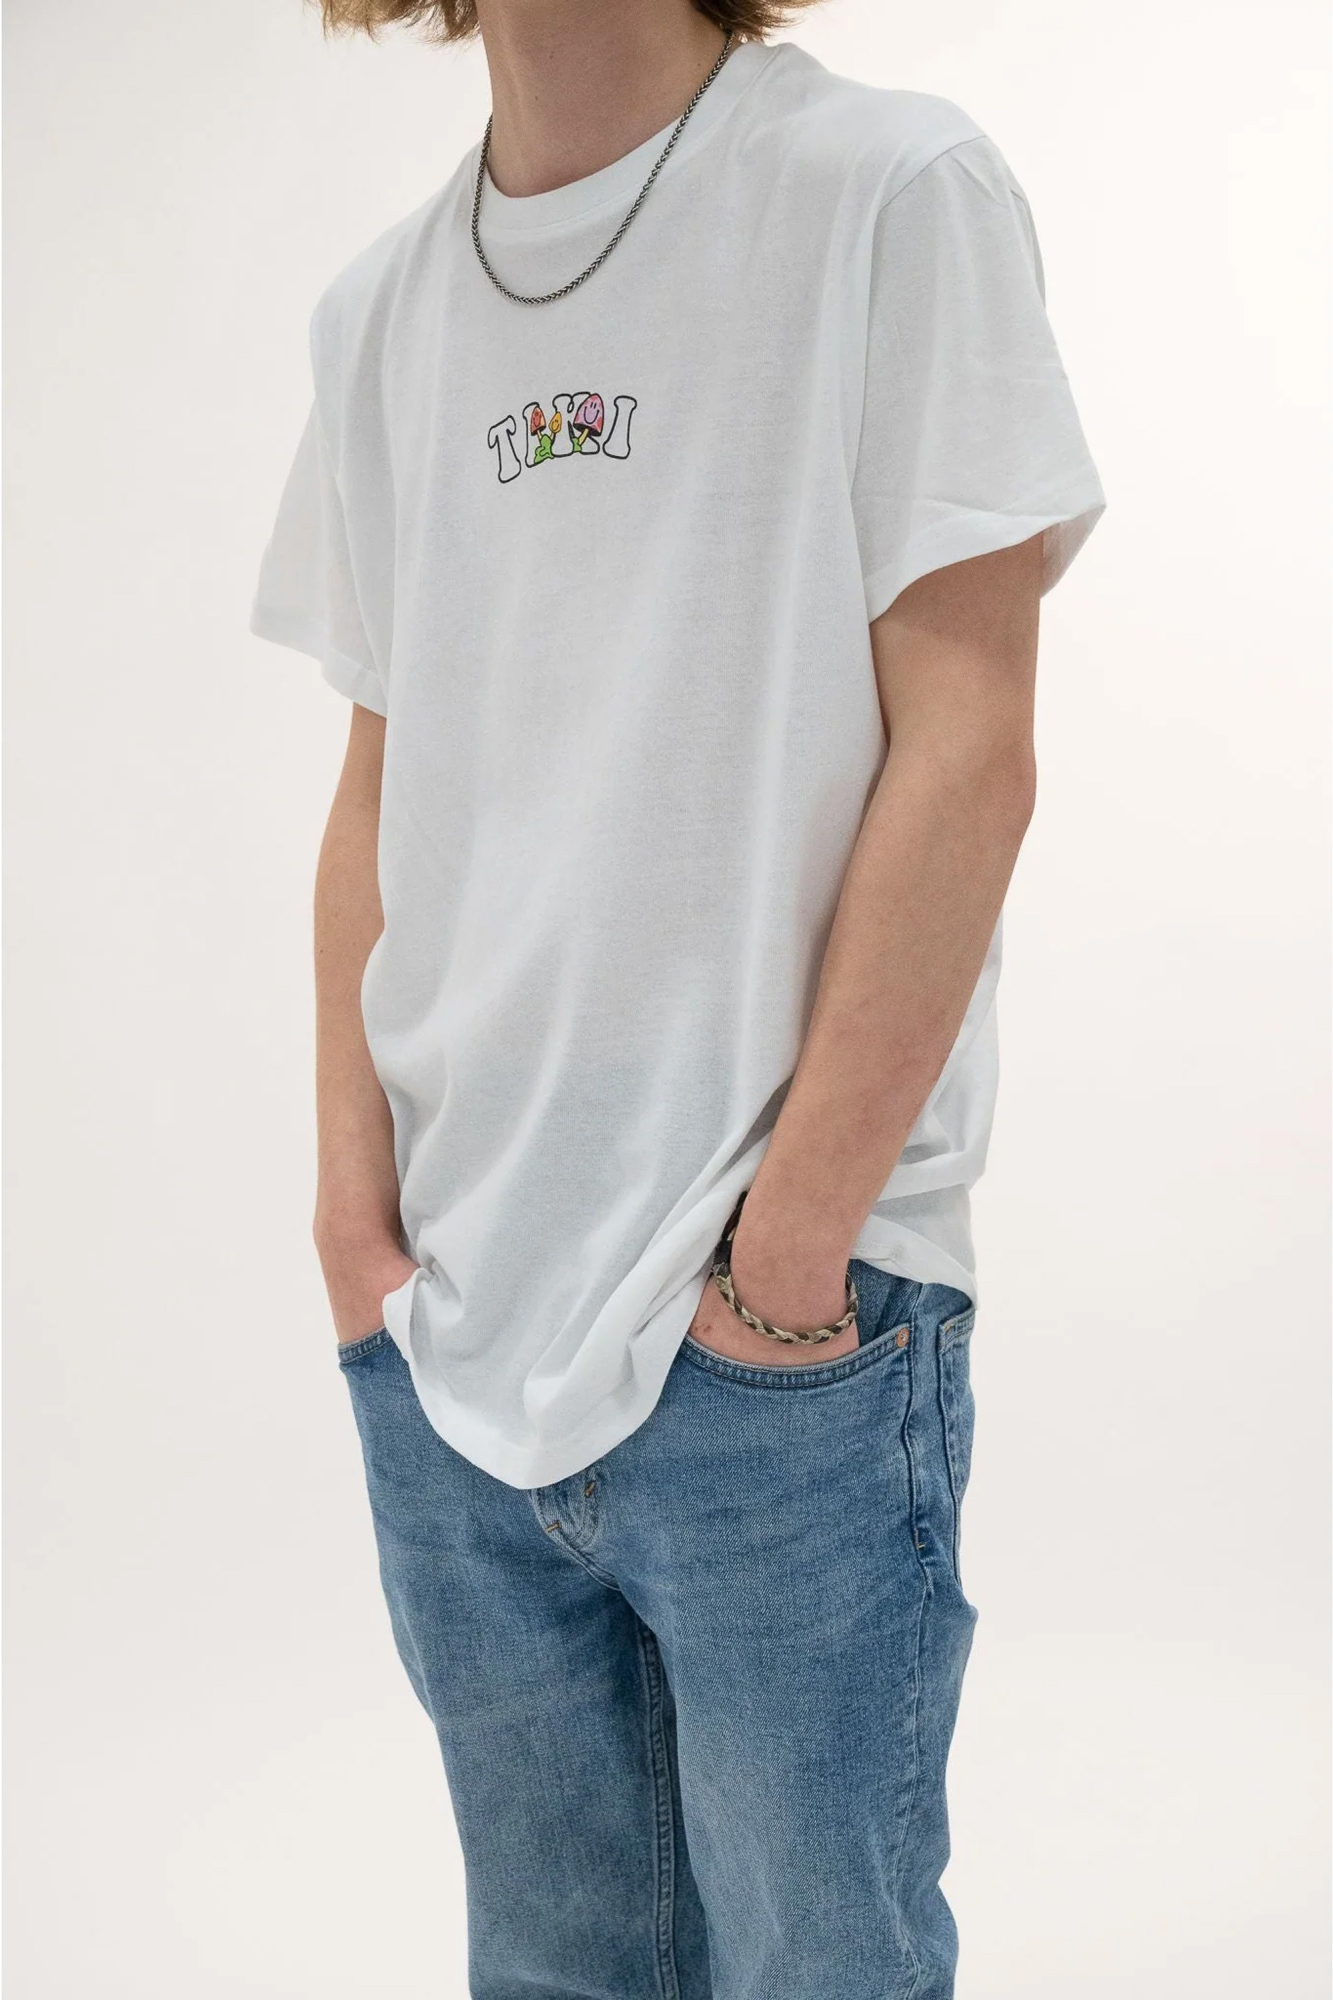 Tiki Unisex Party Wave Short Sleeve T-shirt White - Size: Small